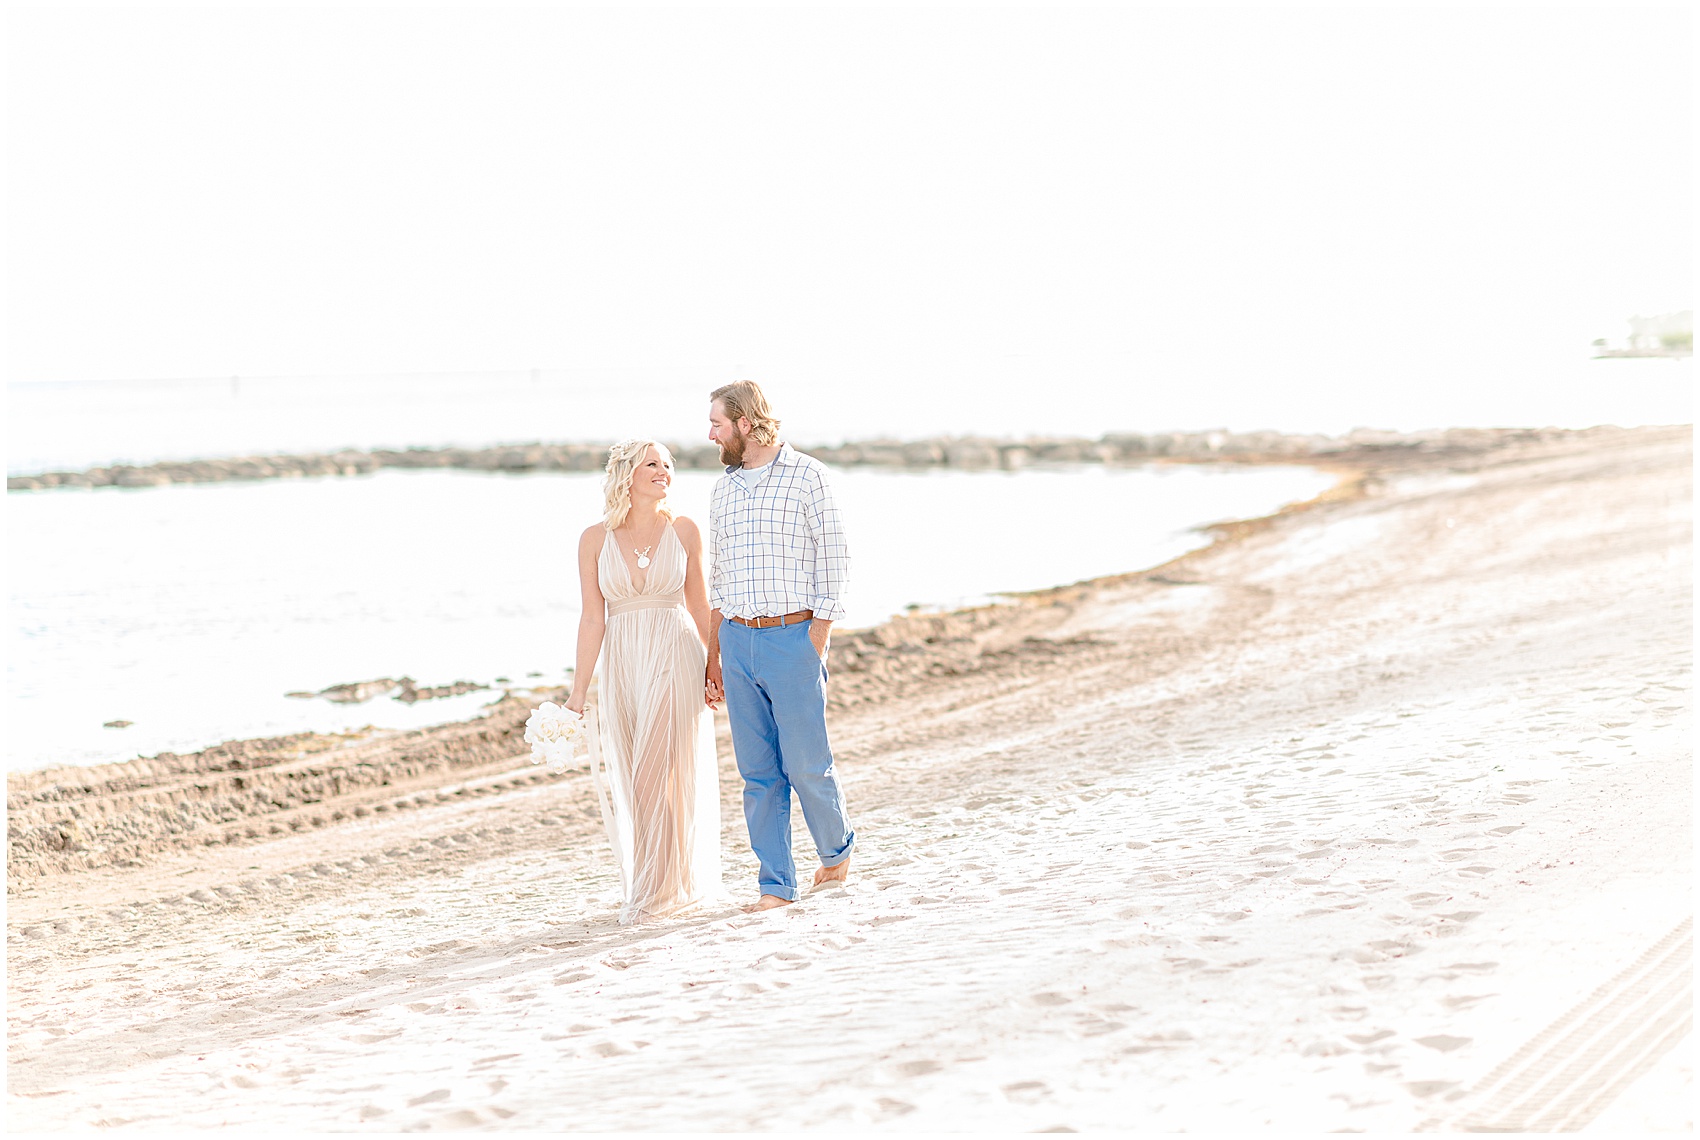 Florida Keys Key West seaside escape elopement Charleston SC wedding Photographer_0567.jpg